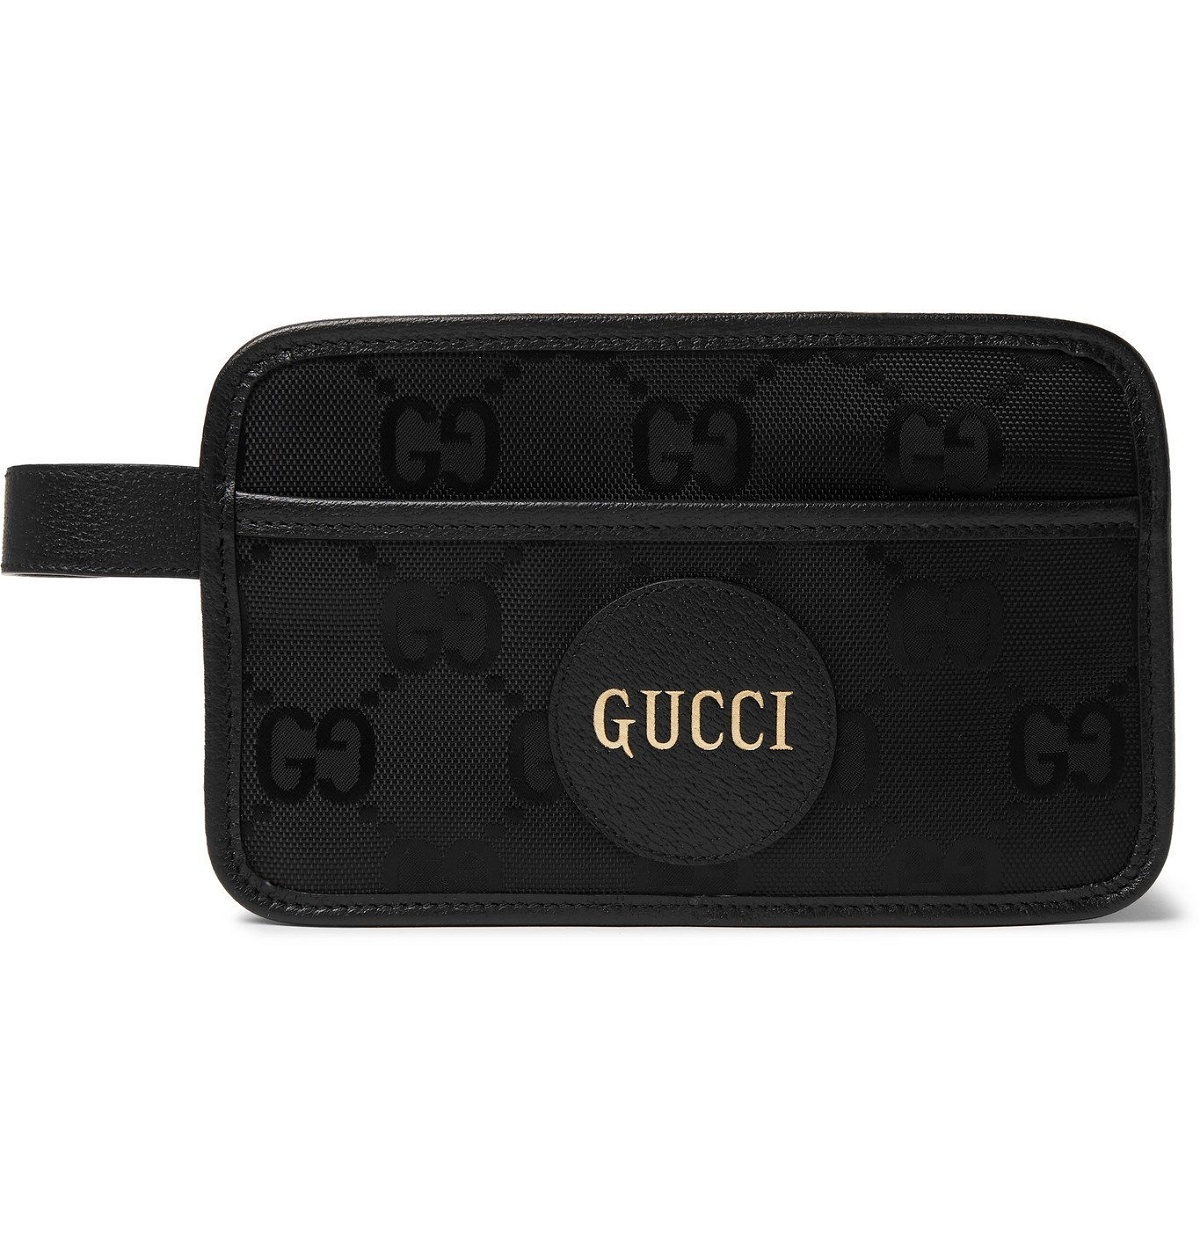 GUCCI - Leather-Trimmed Monogrammed ECONYL Wash Bag - Black Gucci